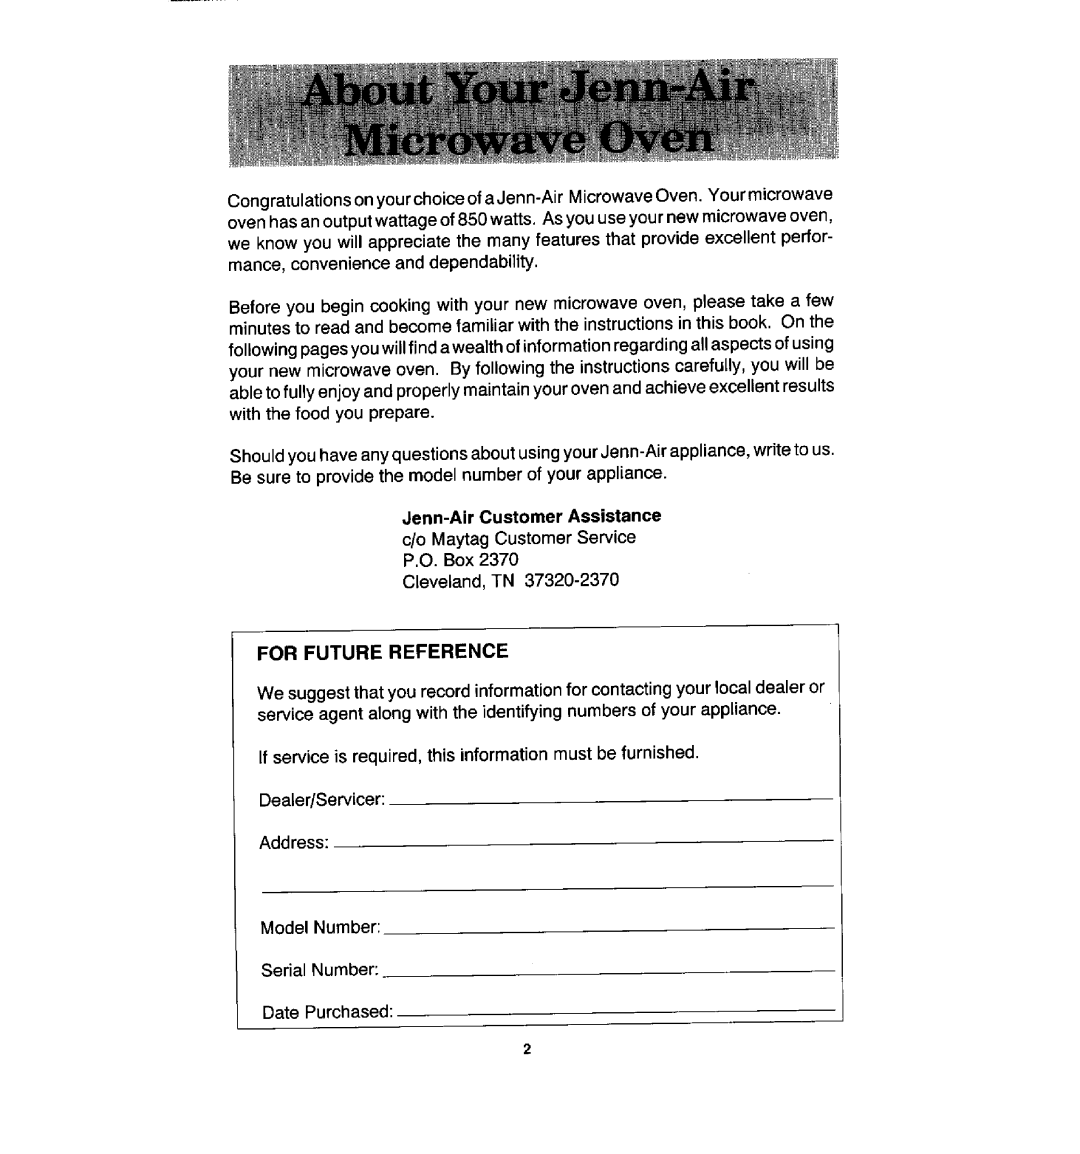 Jenn-Air M170 manual Jenn-AirCustomer Assistance, c/o MaytagCustomerService P.O. Box2370, Cleveland,TN FOR FUTURE REFERENCE 